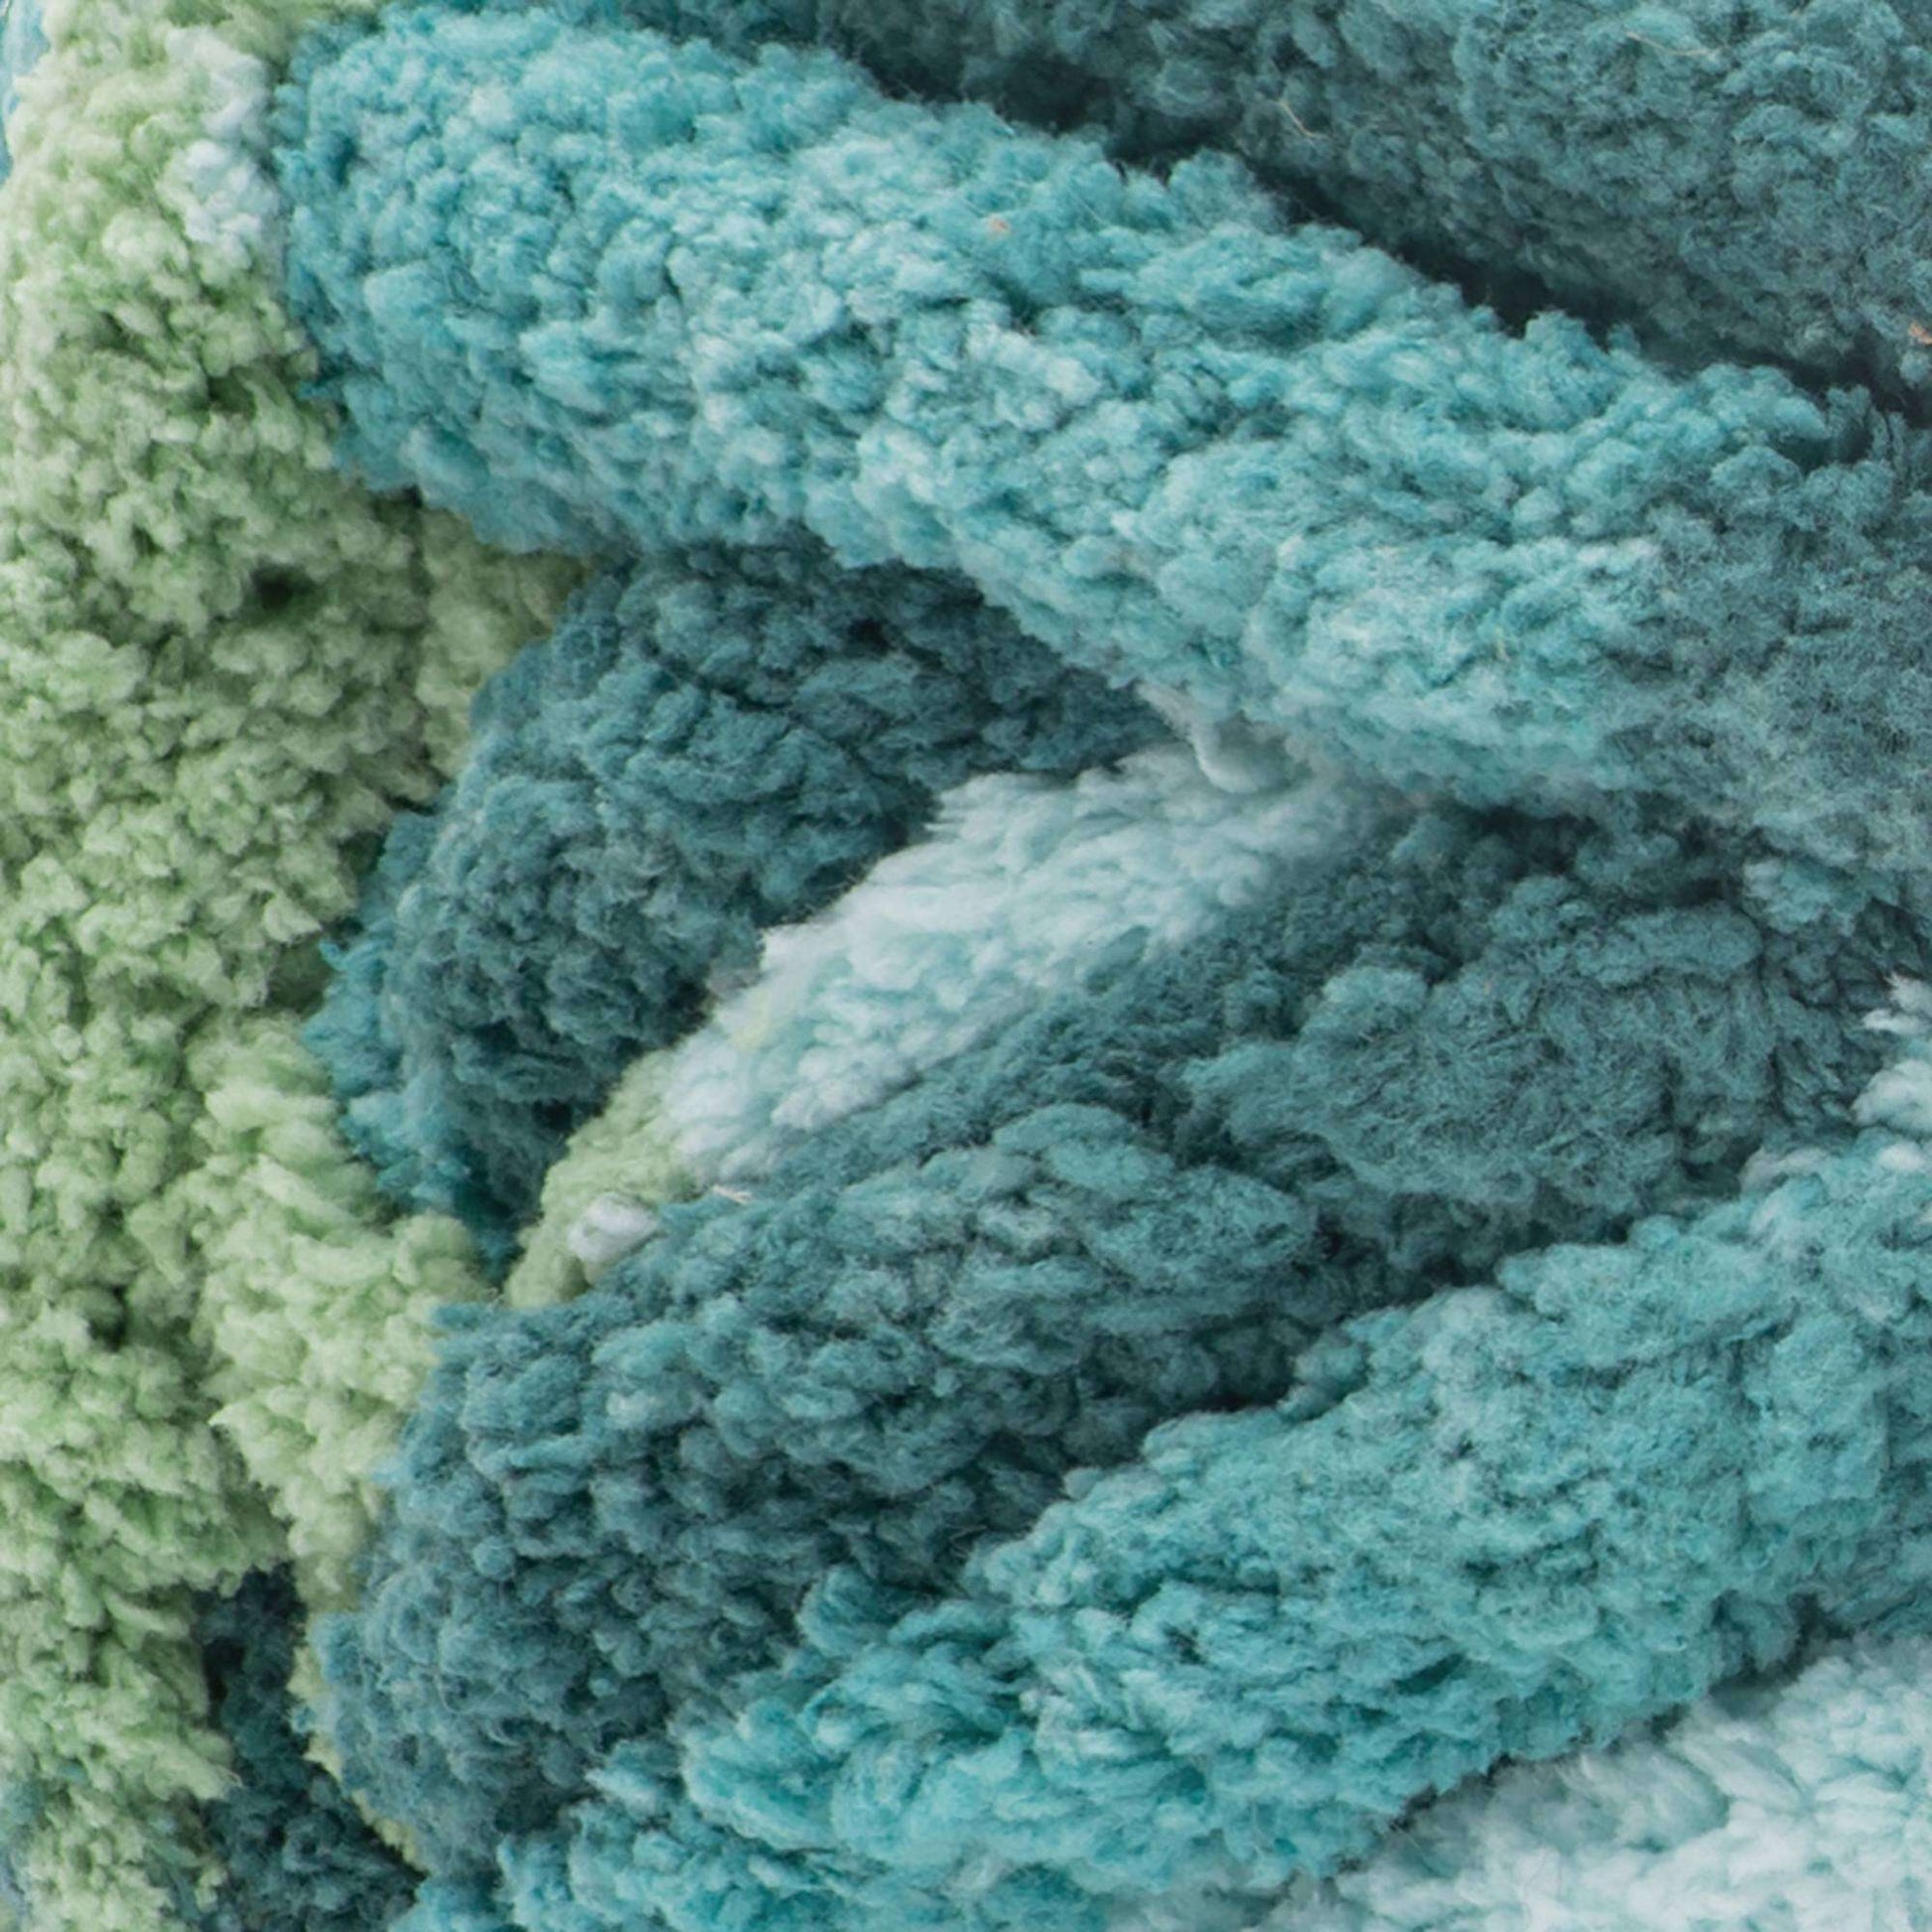 Bernat Blanket Extra Thick Yarn (600g/21.2oz) Tropical Temptation